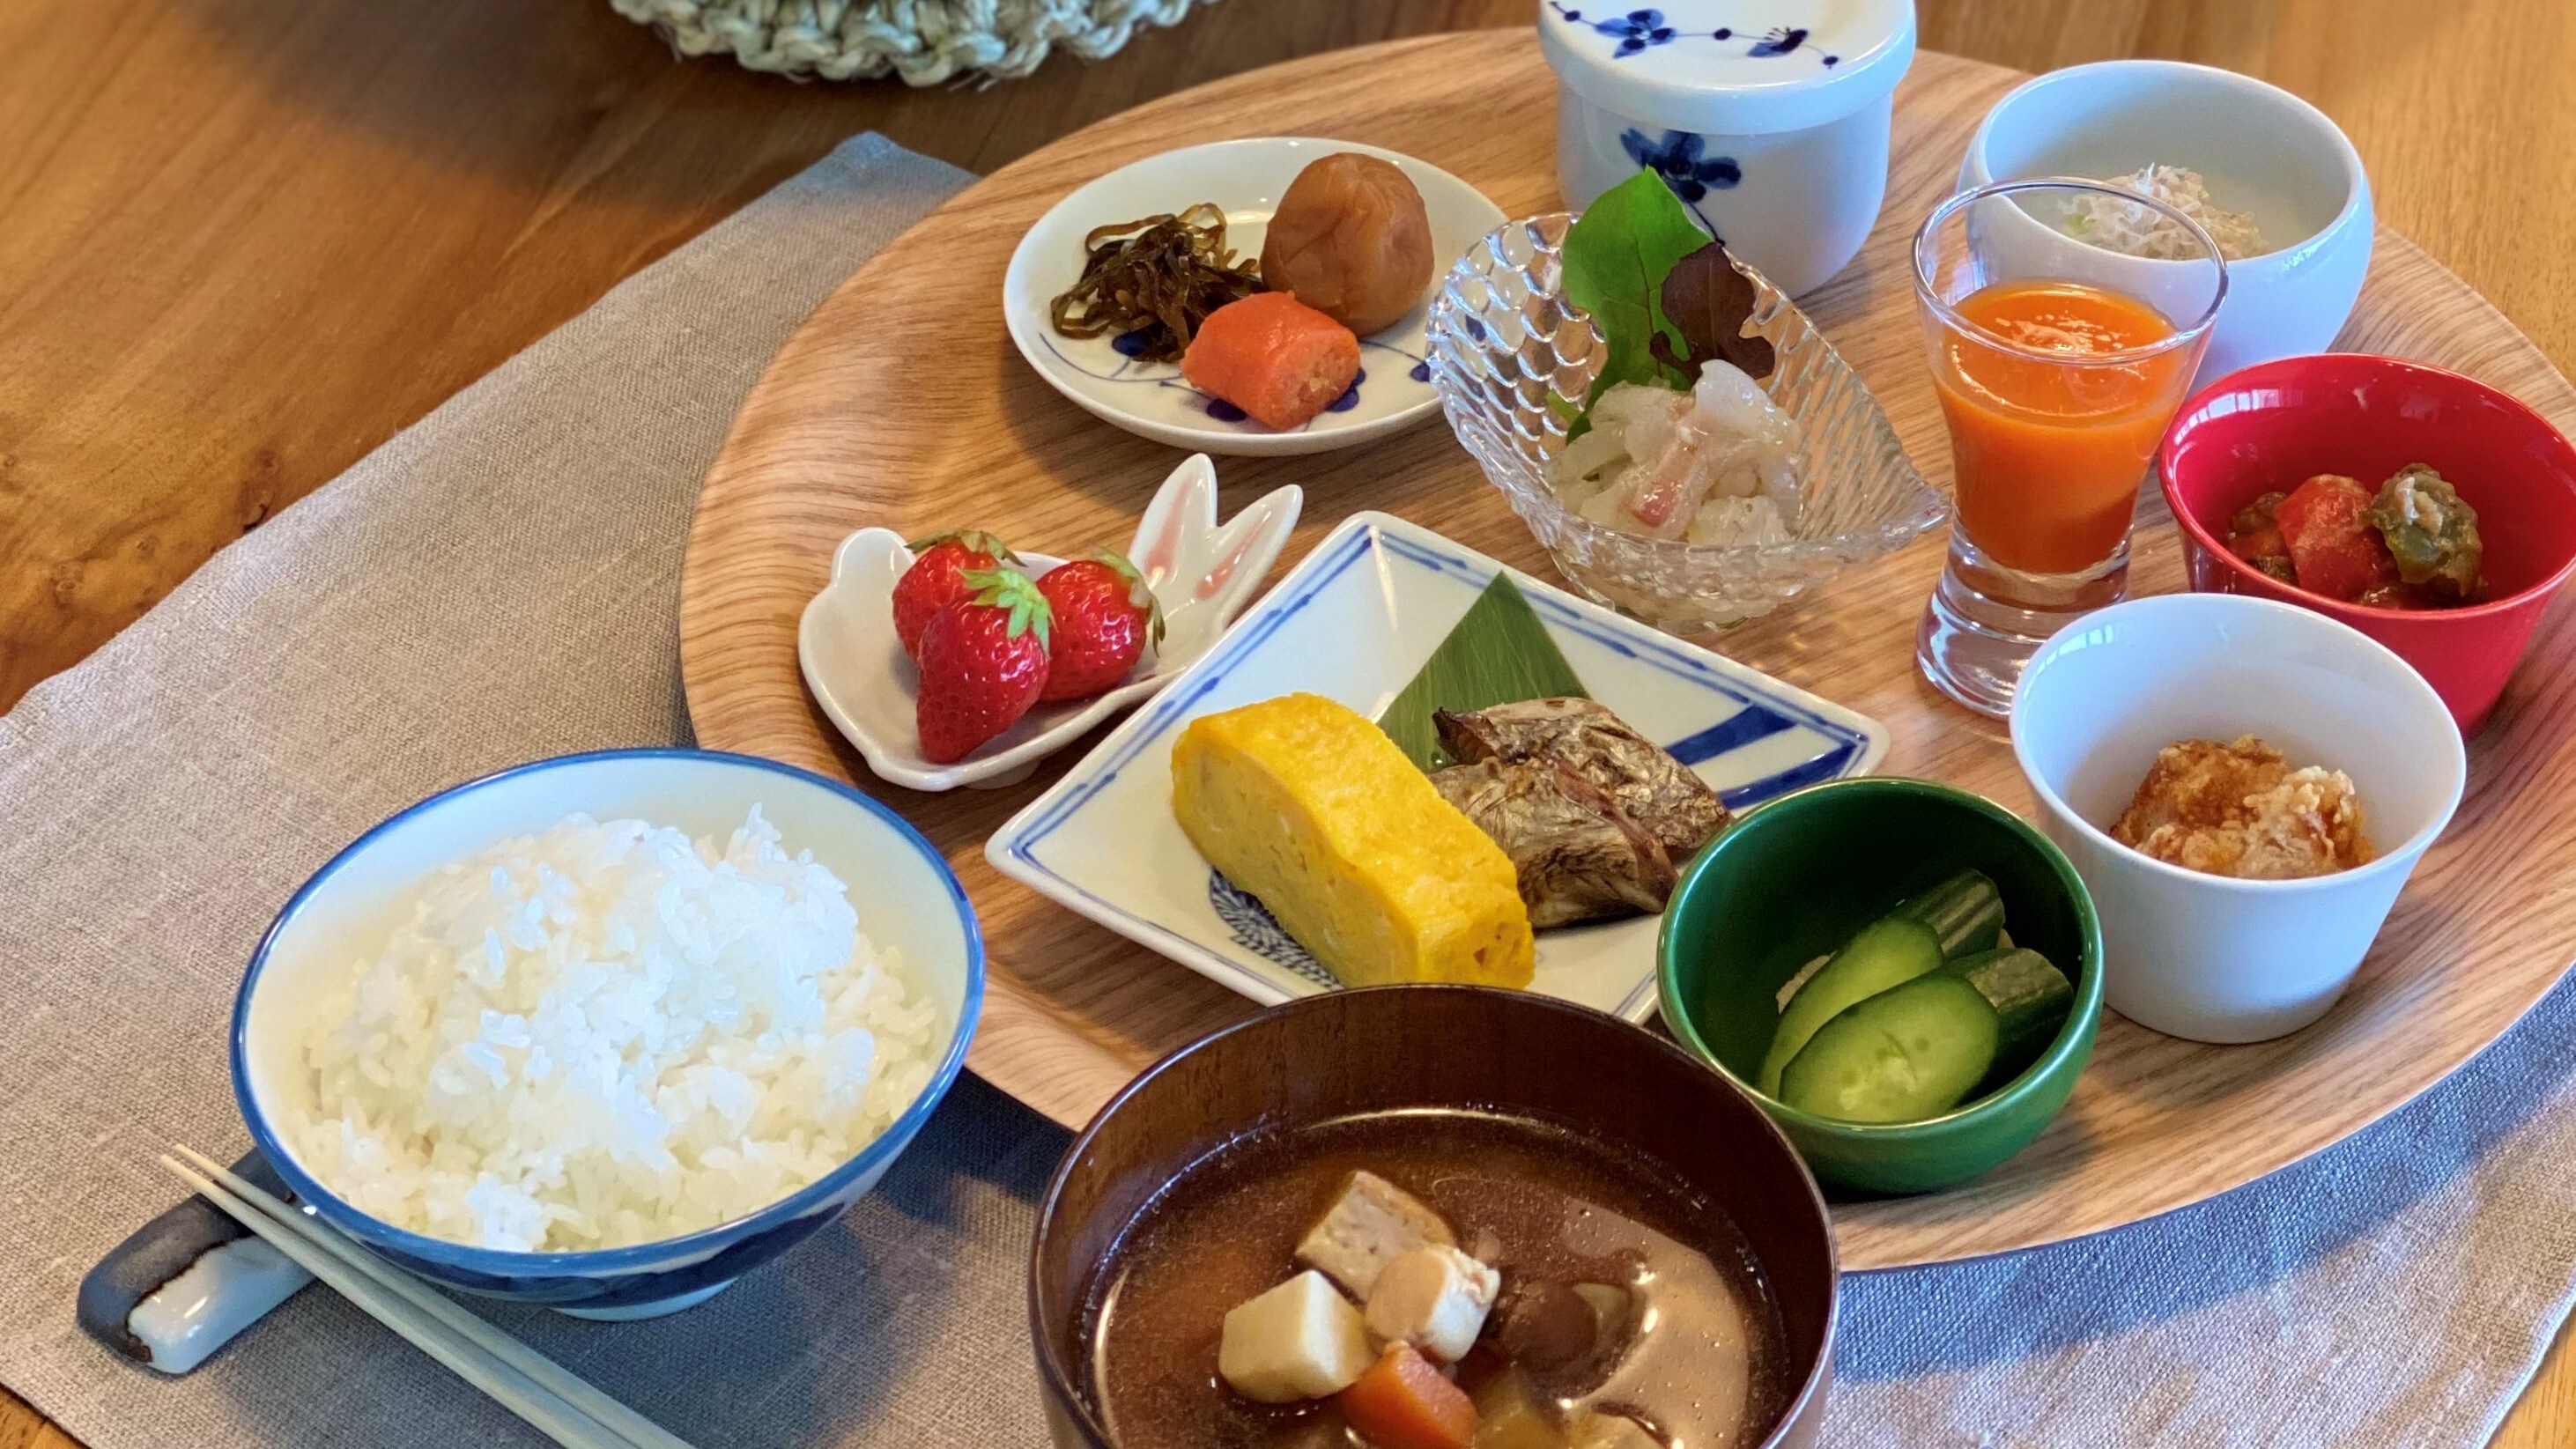 Ibusuki Royal Hotel's commitment breakfast